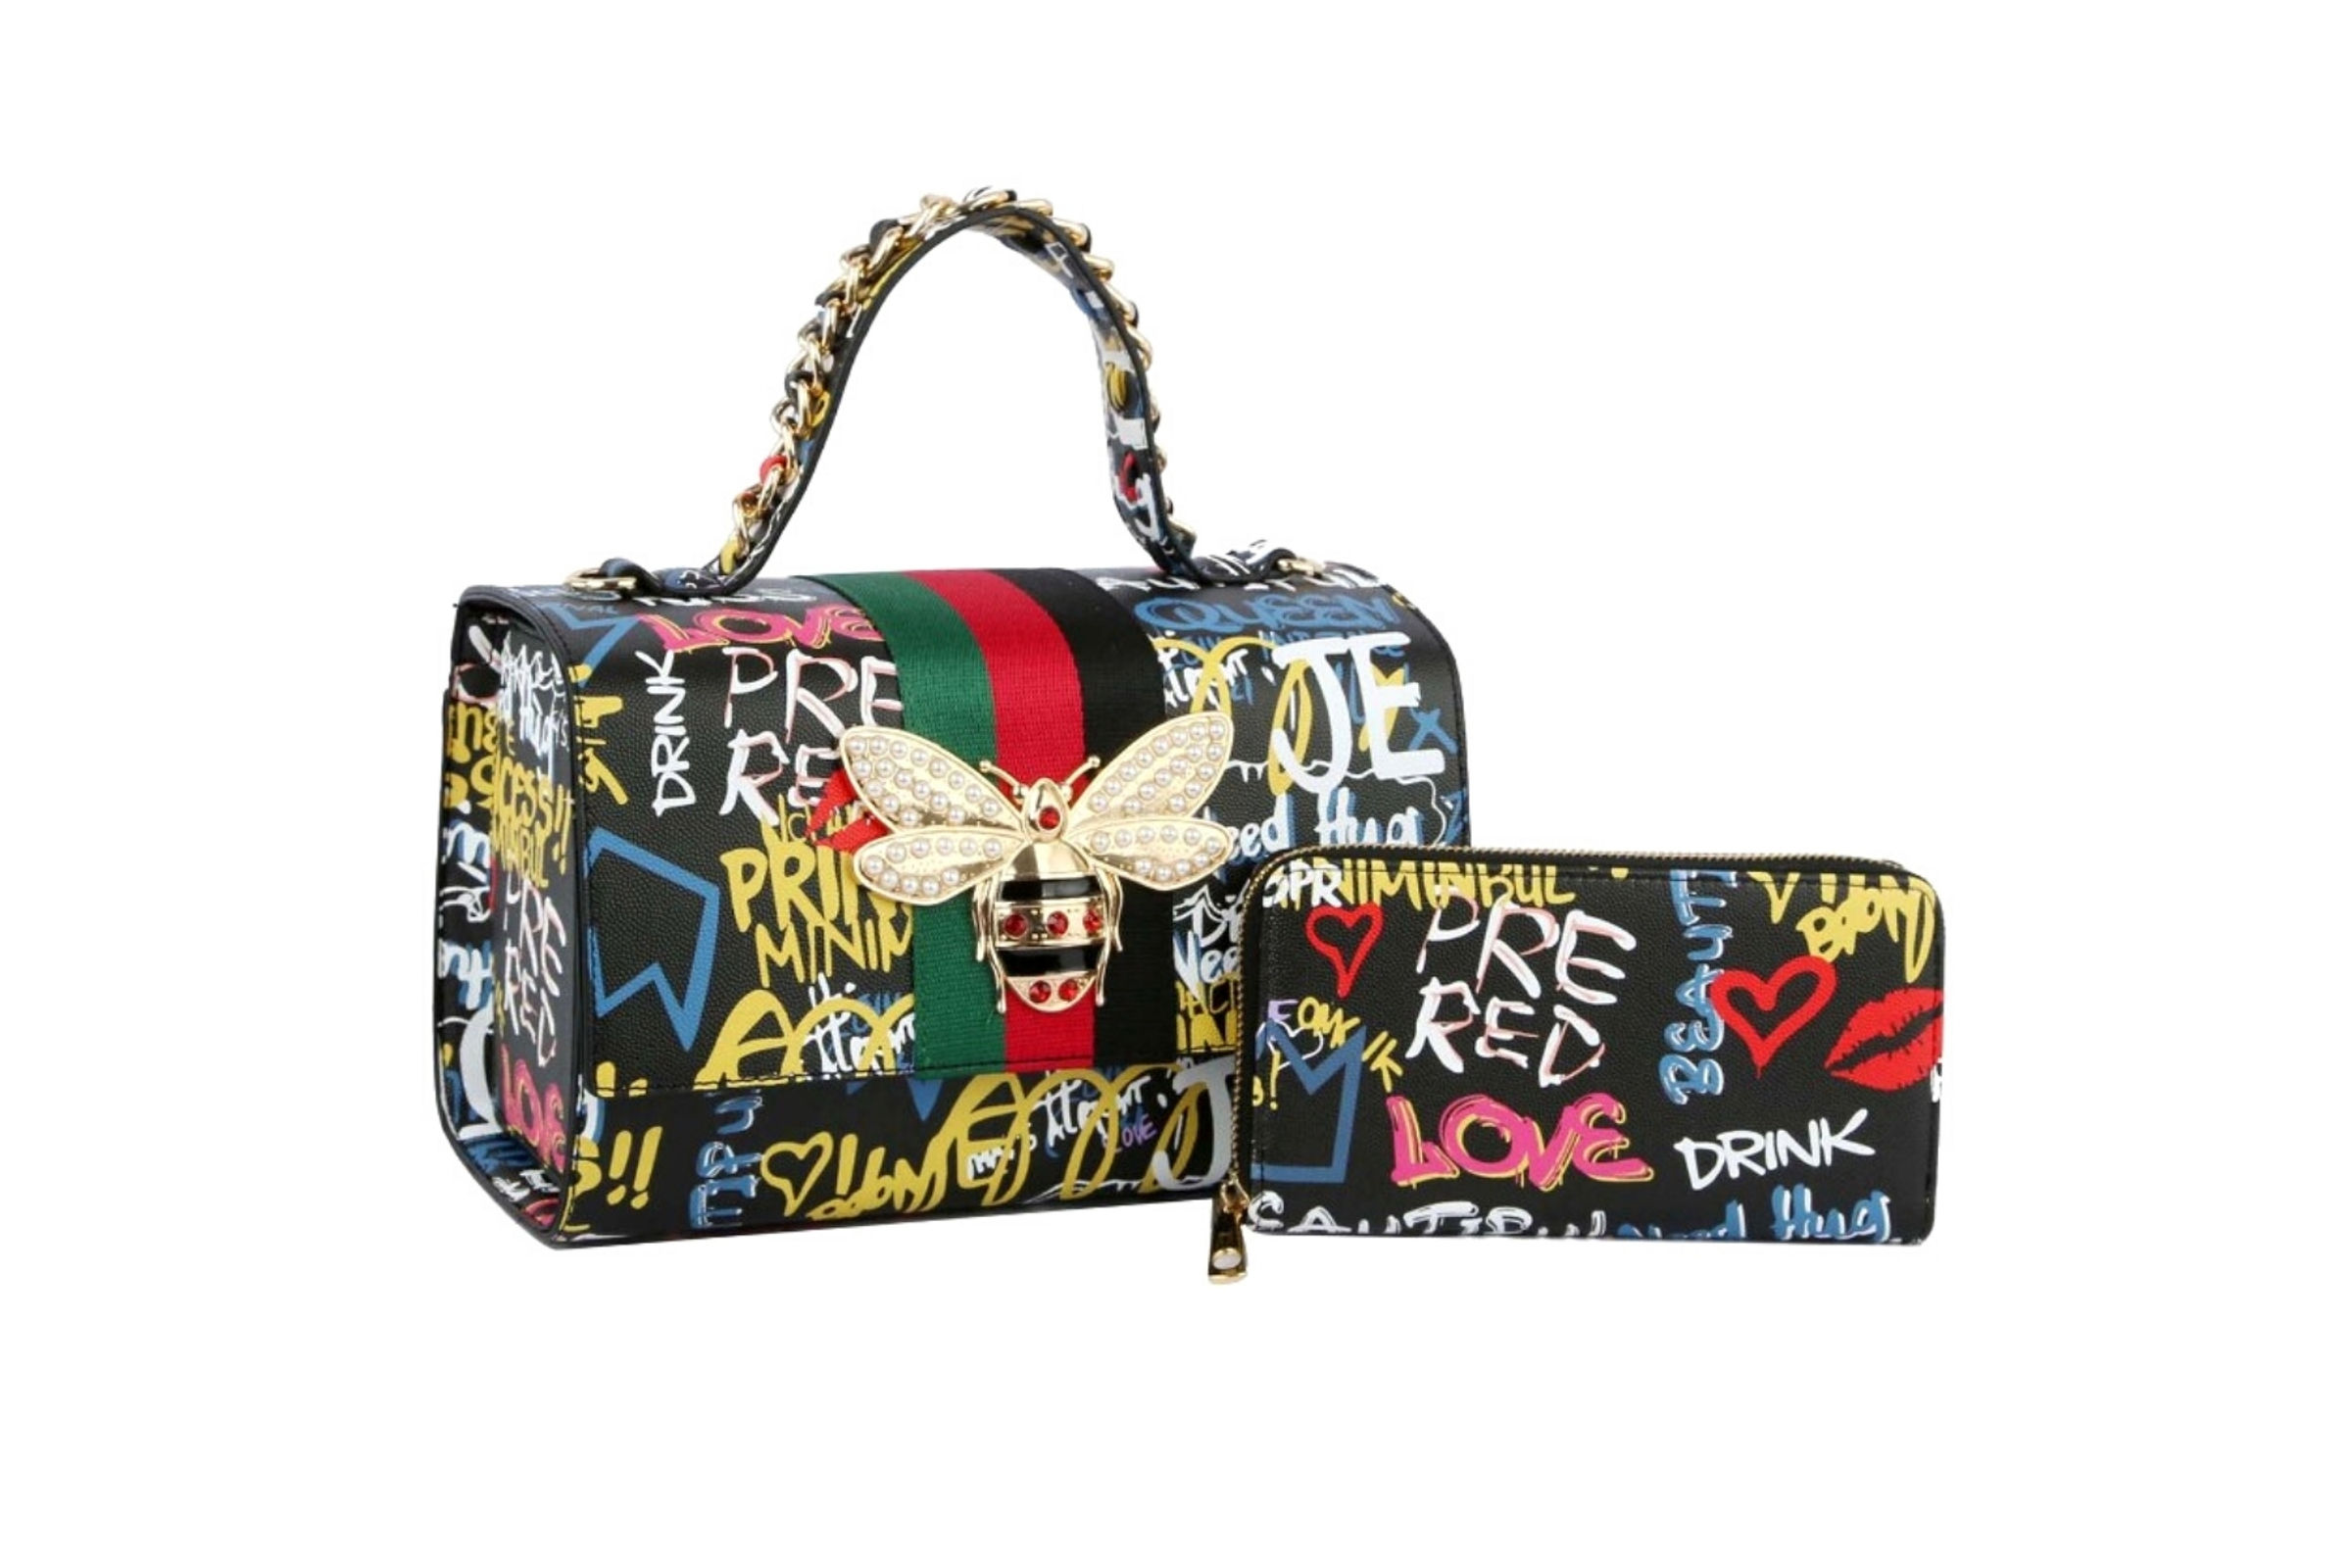 kuchen and bag graffiti clutch bag wide stape | eBay